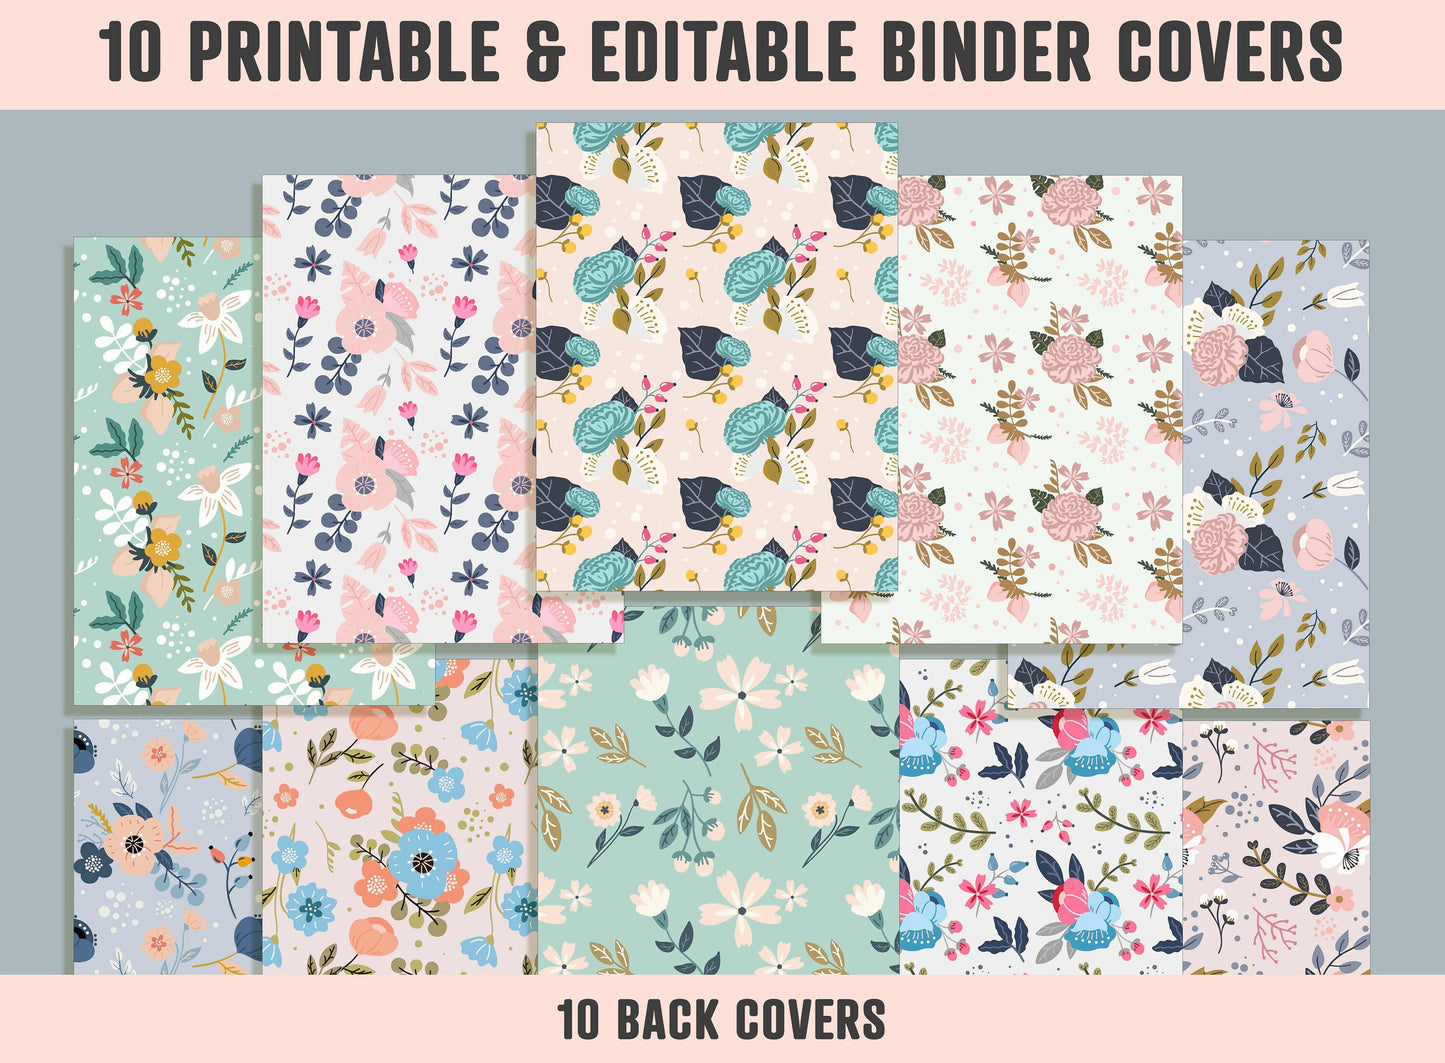 Flower Binder Cover, 10 Printable & Editable Binder Covers + Spines, Binder Inserts, Teacher/School Planner Cover Template, Floral Binder